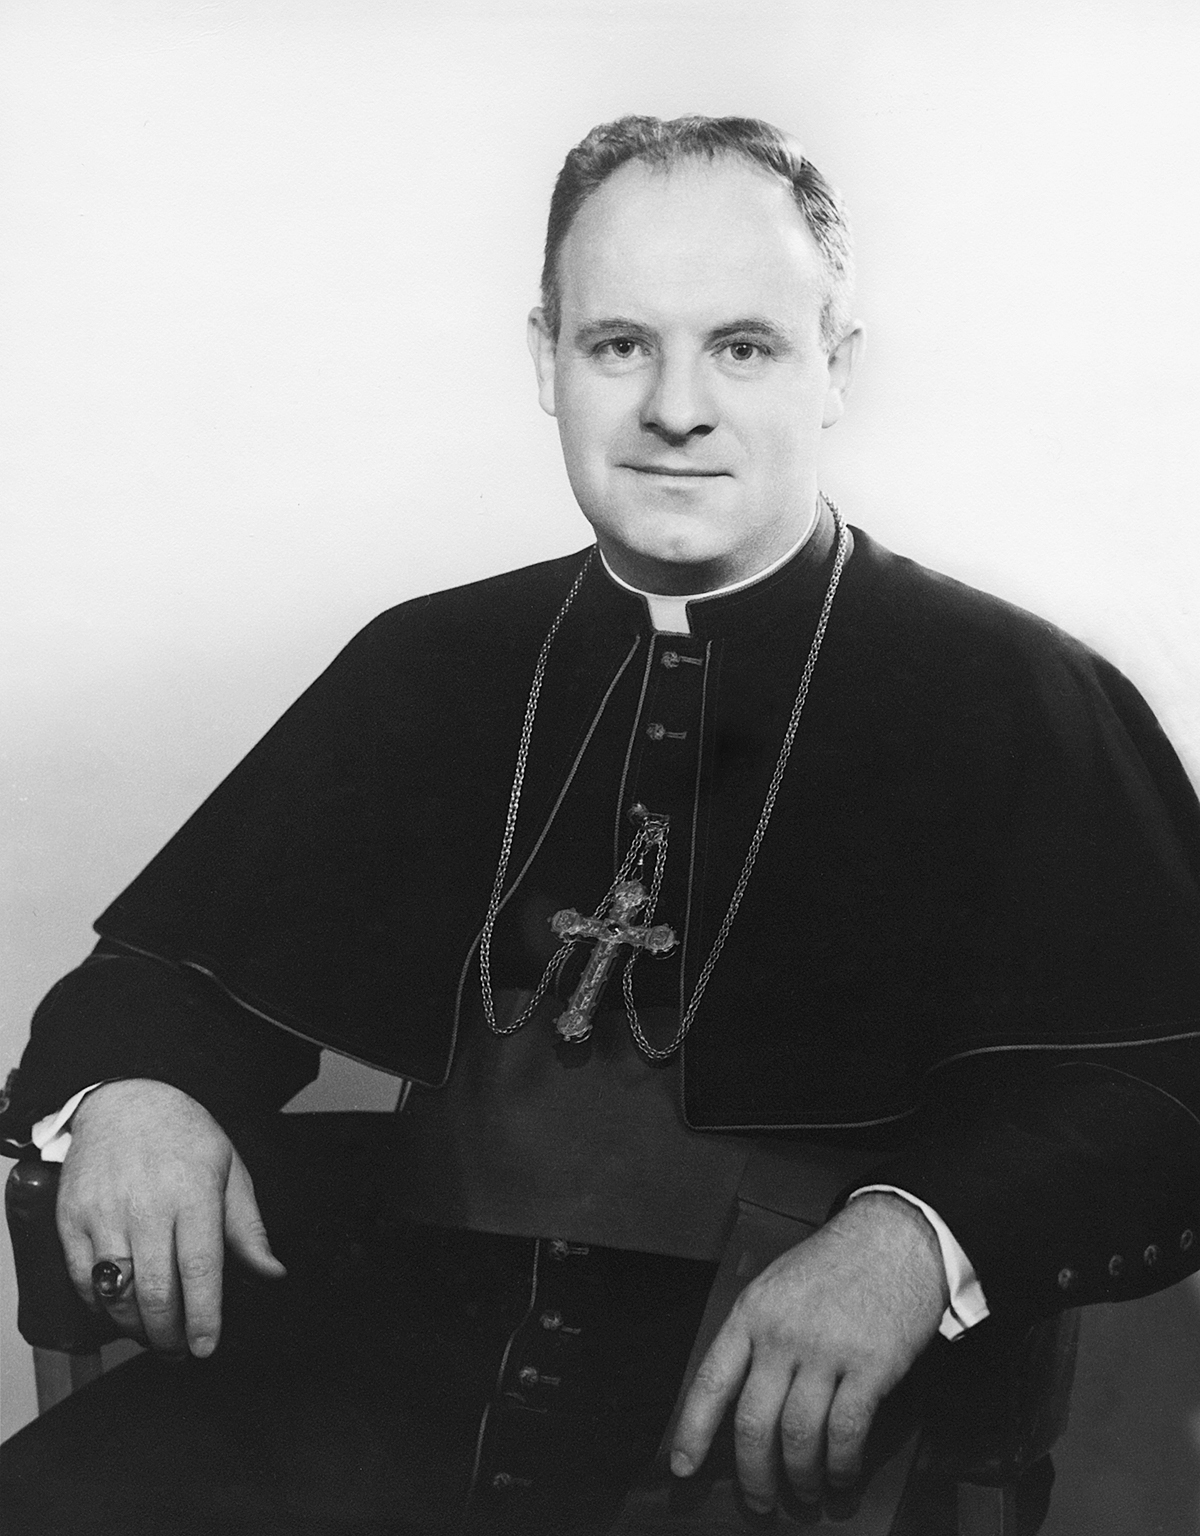 Arch Bishop Raymond Hunthausen